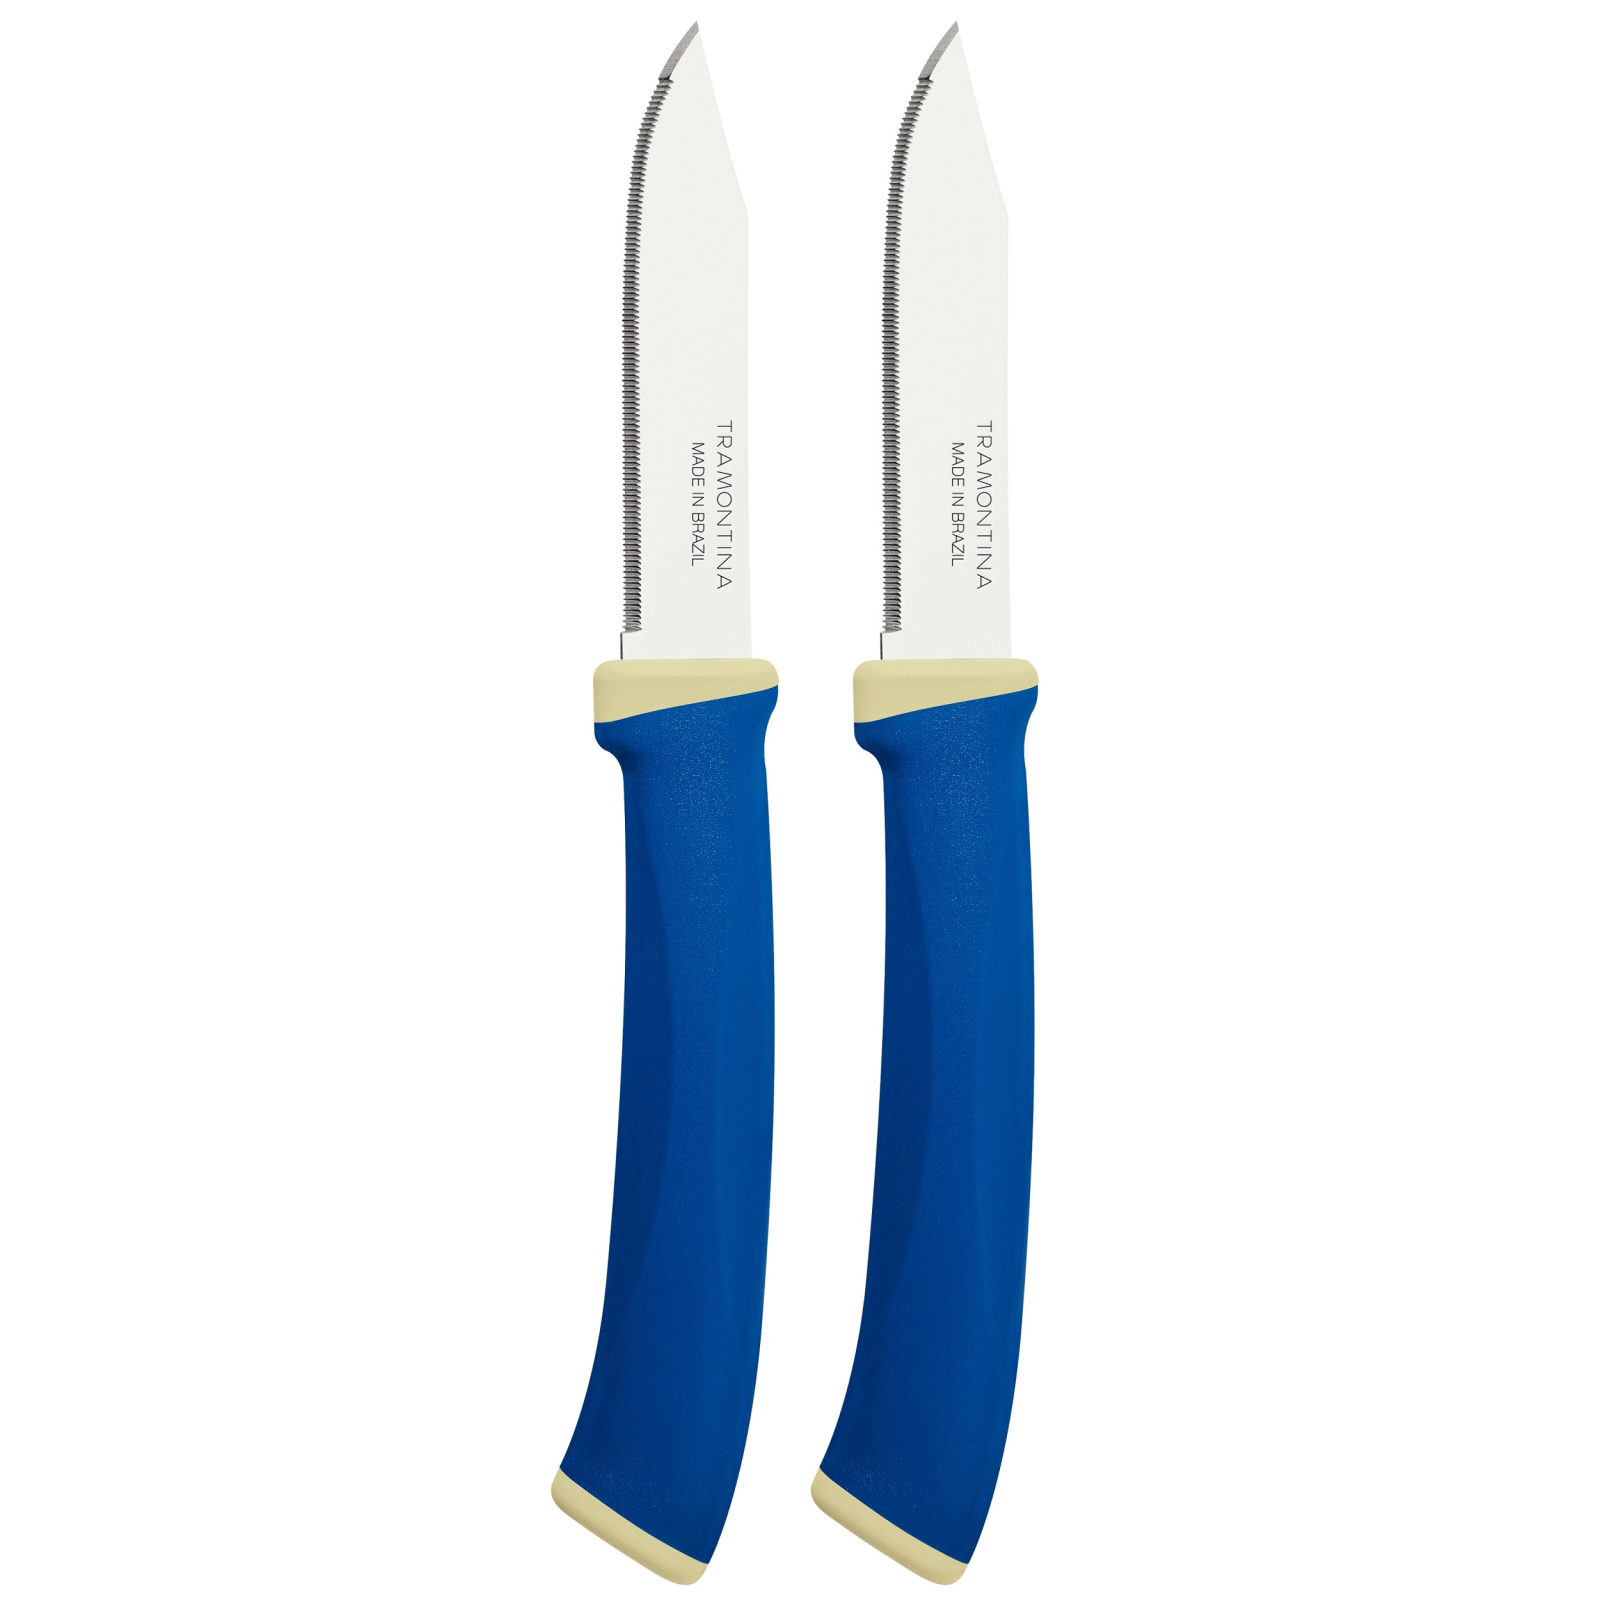 Набор ножей Tramontina Felice Blue Vegetable Serrate 76 мм 2 шт (23491/213)